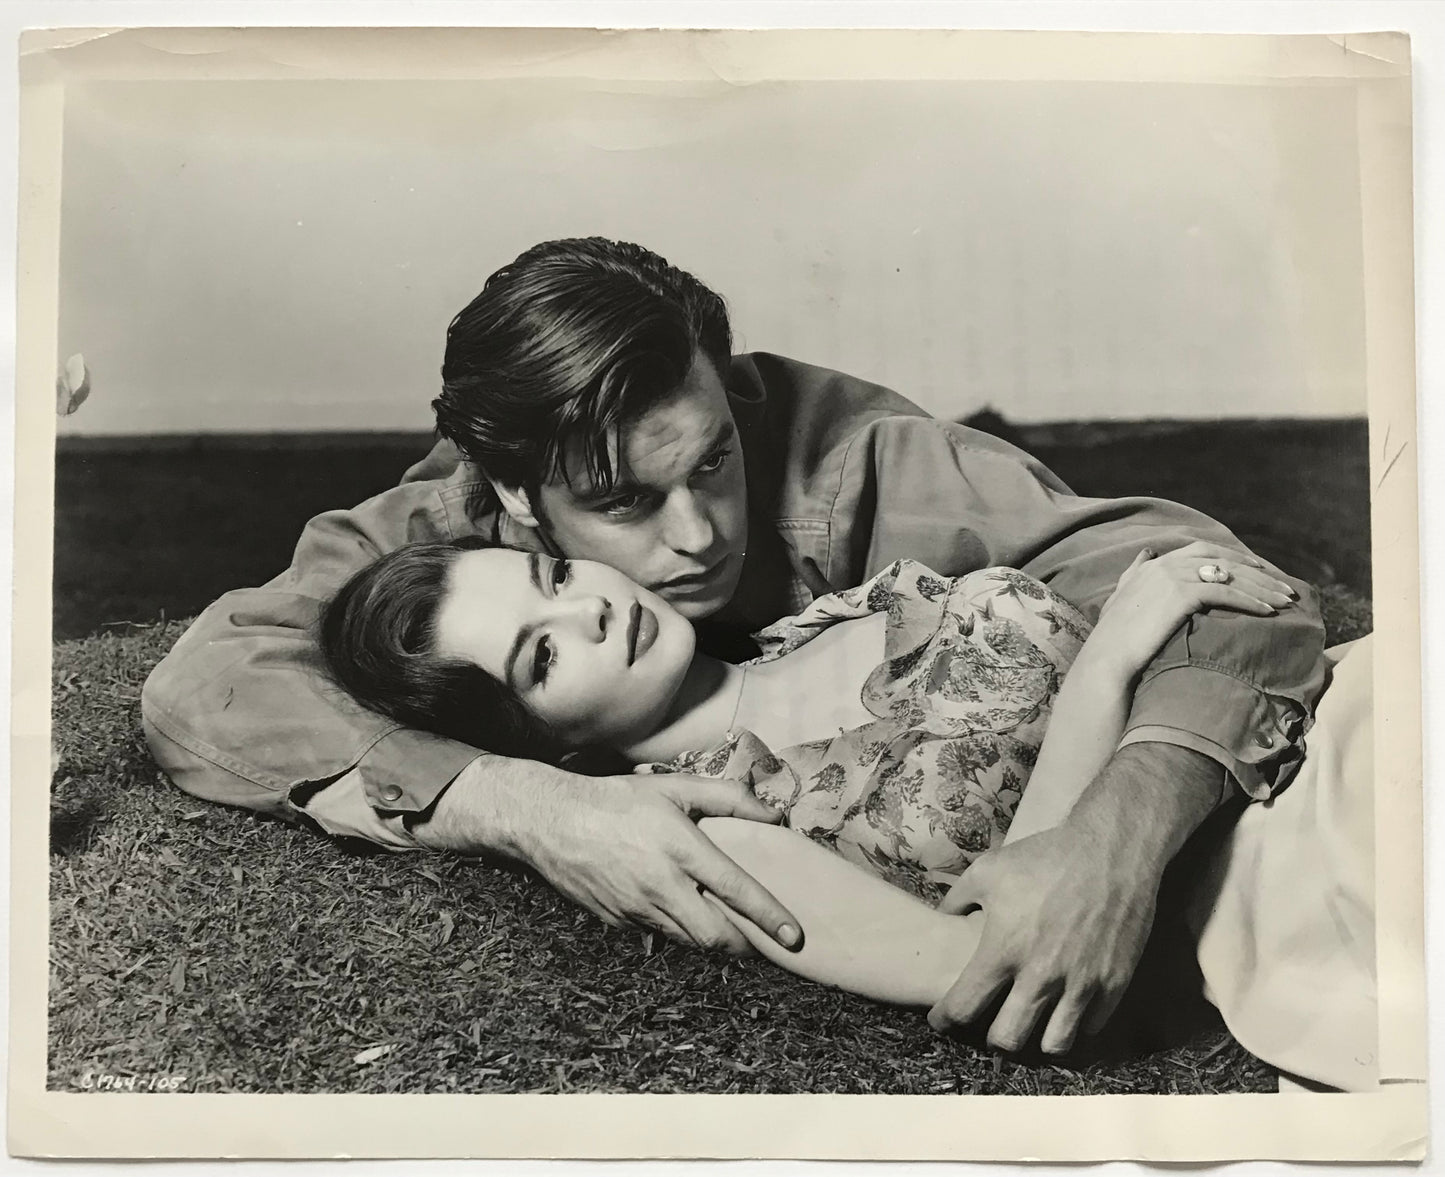 Natalie Wood & Robert Wagner "Les Jeunes Loups" - 1960